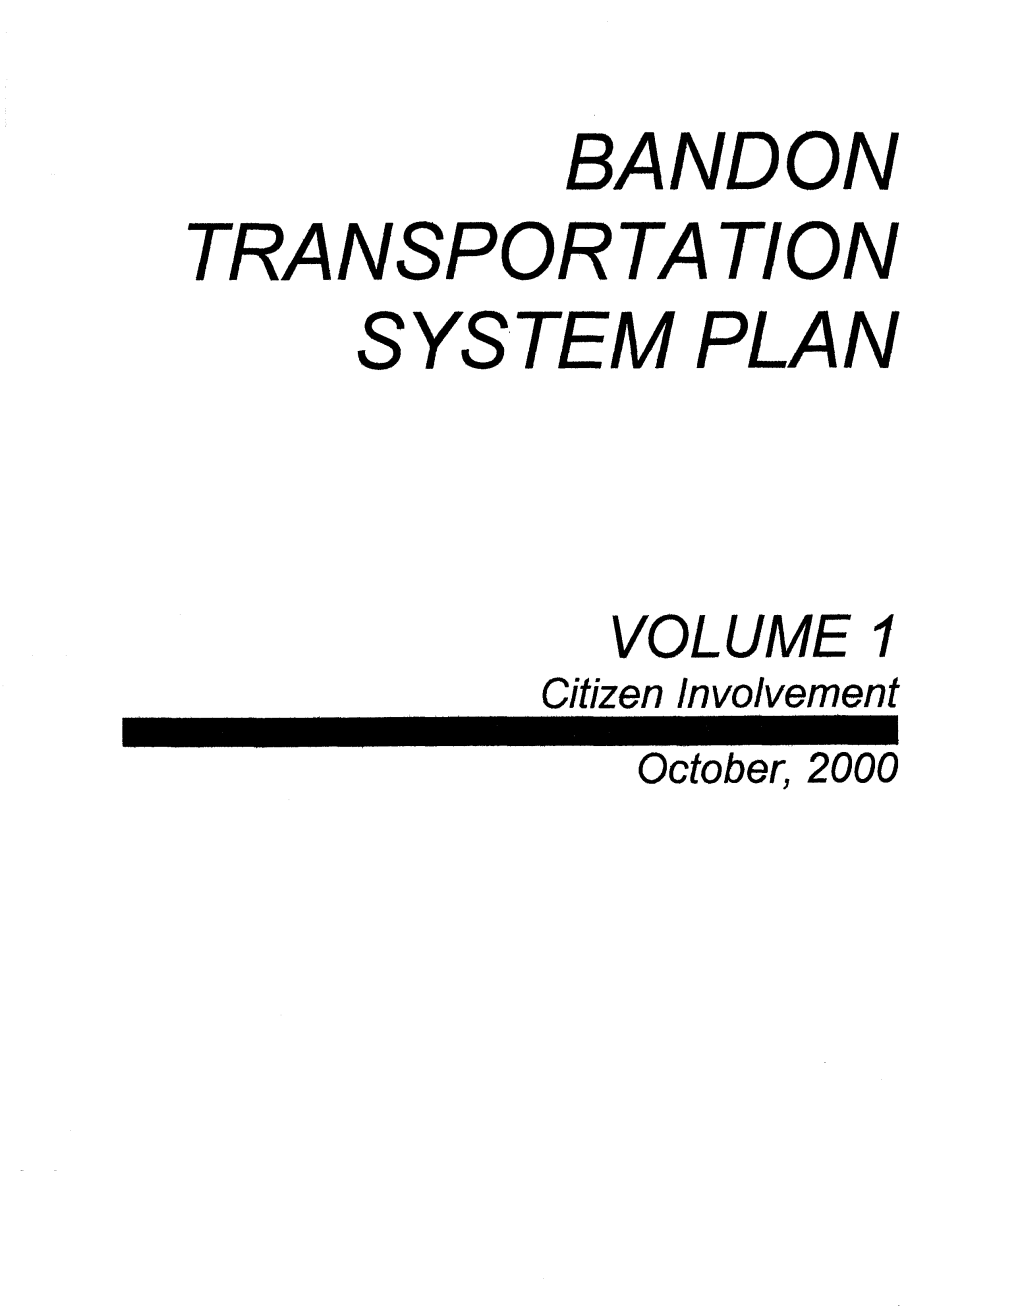 Bandon Transportation System Plan